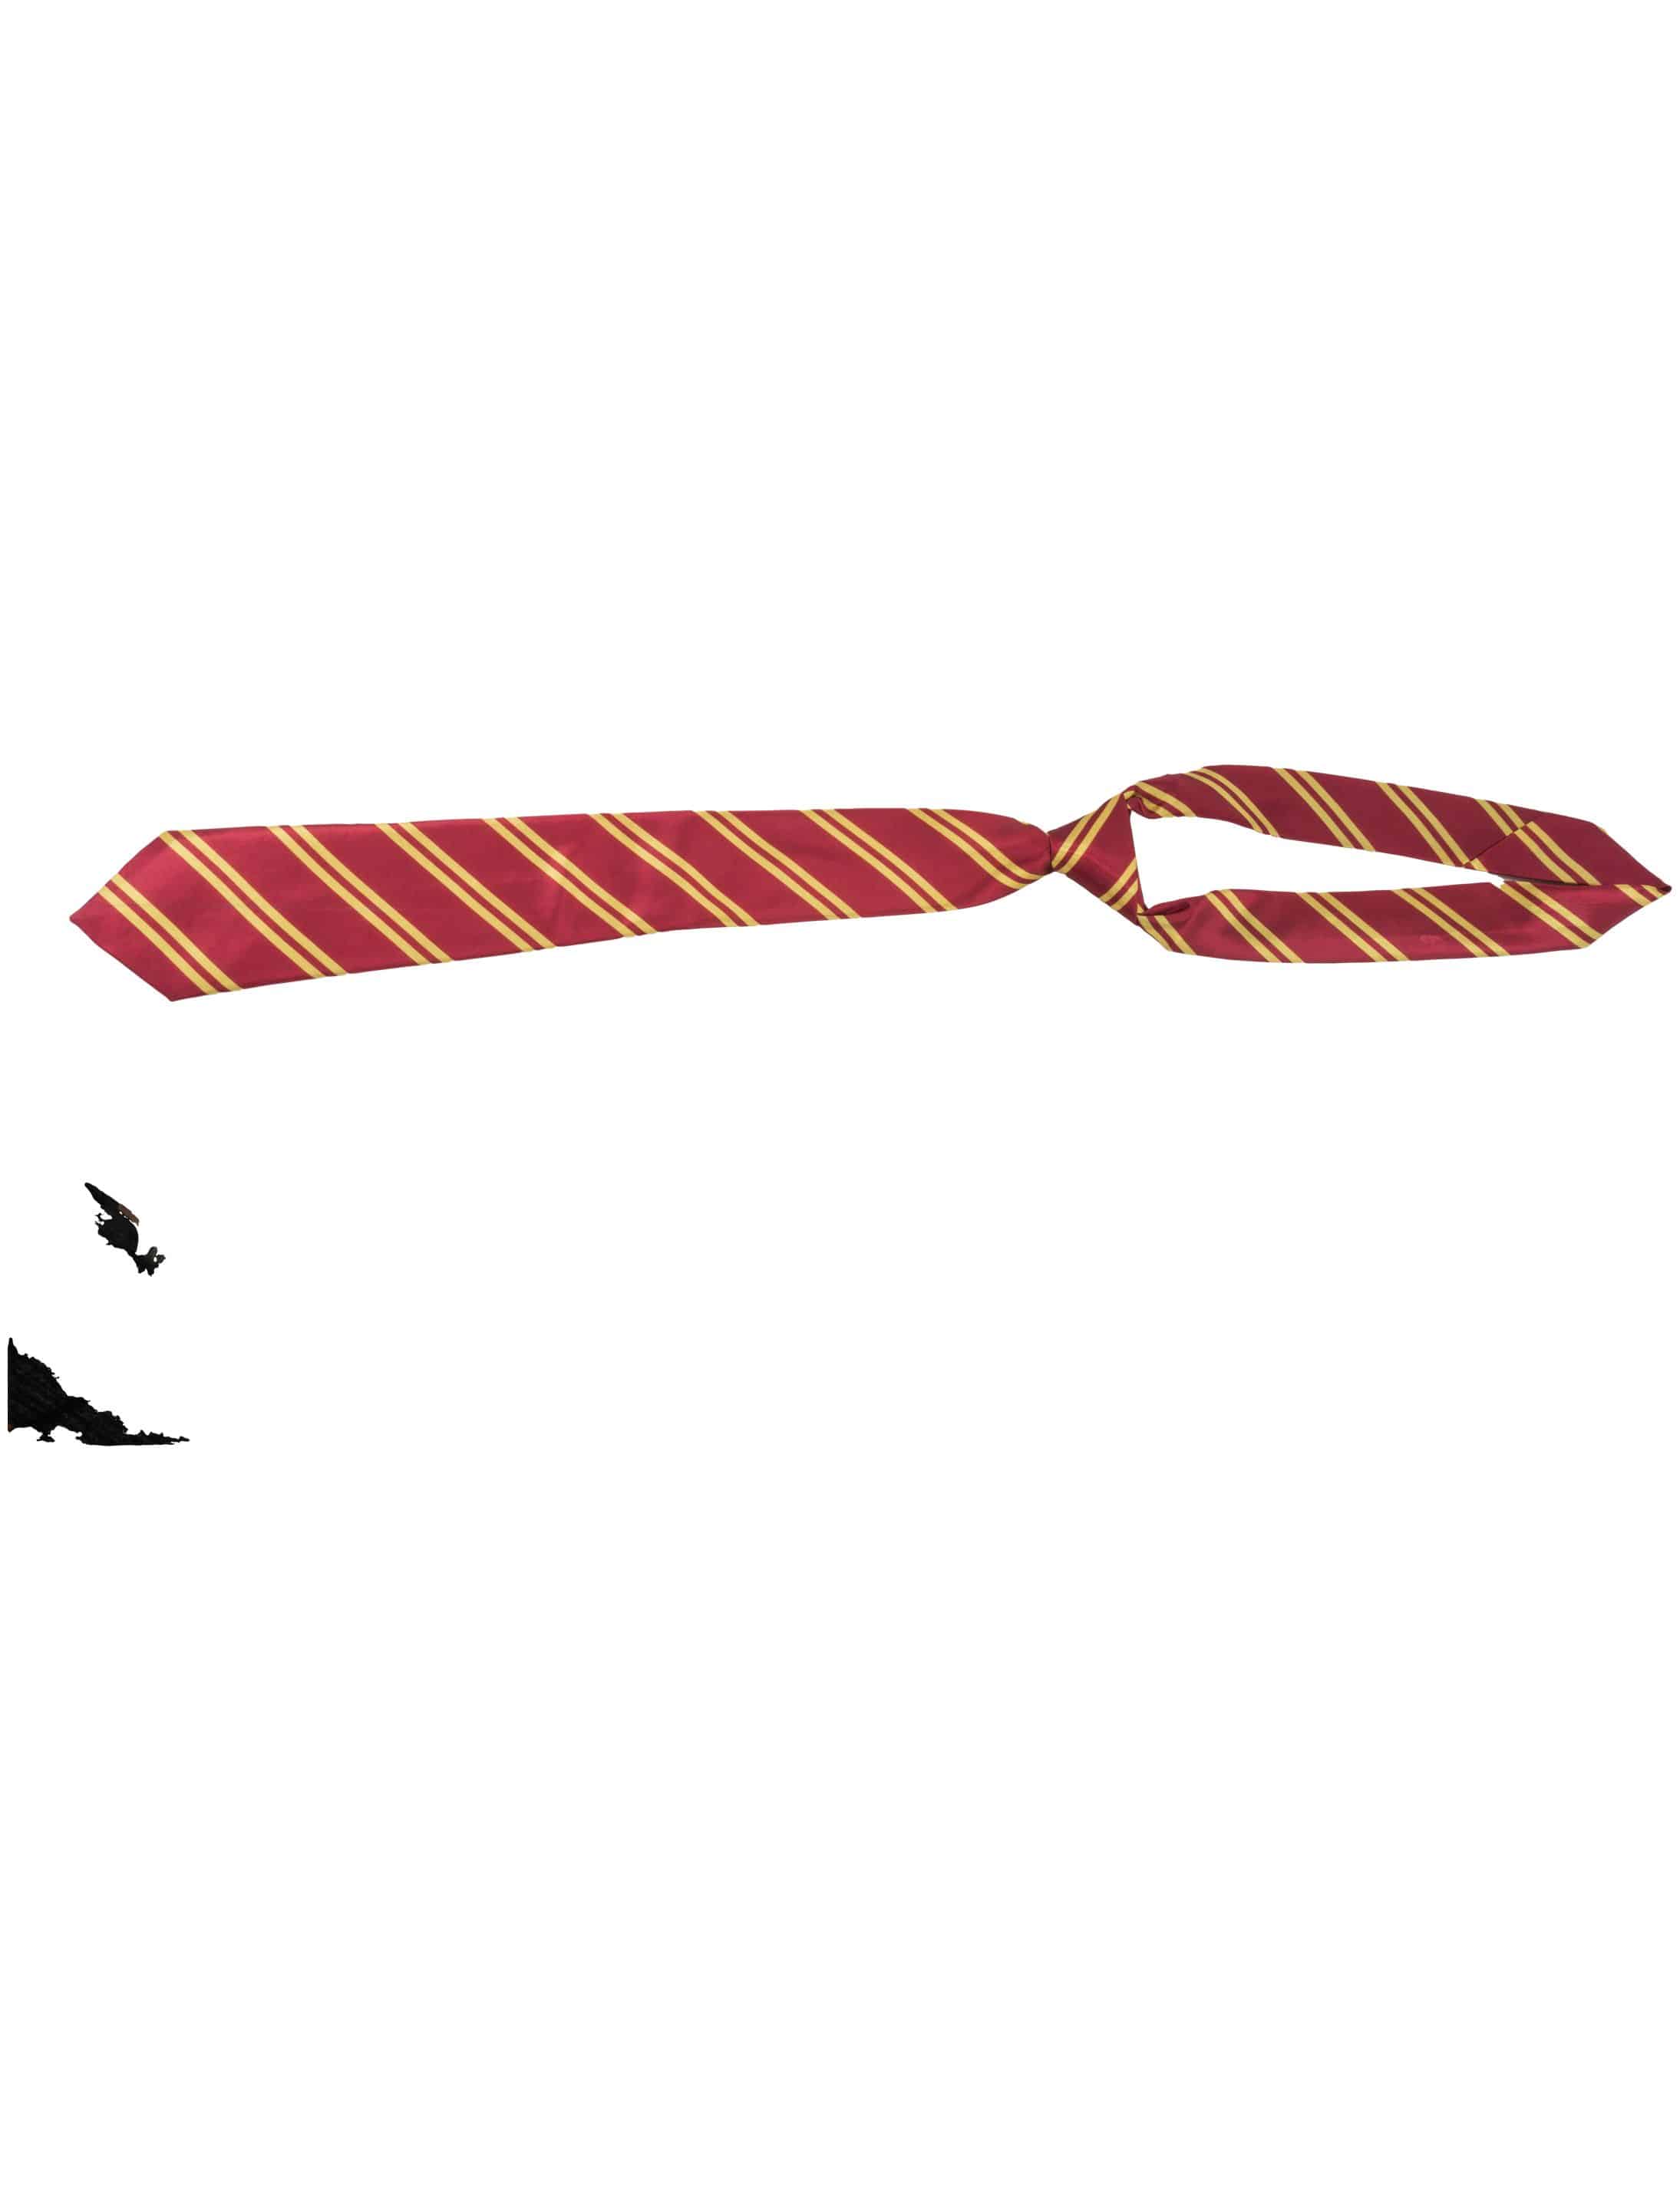 Krawatte Zauberer rot/gold